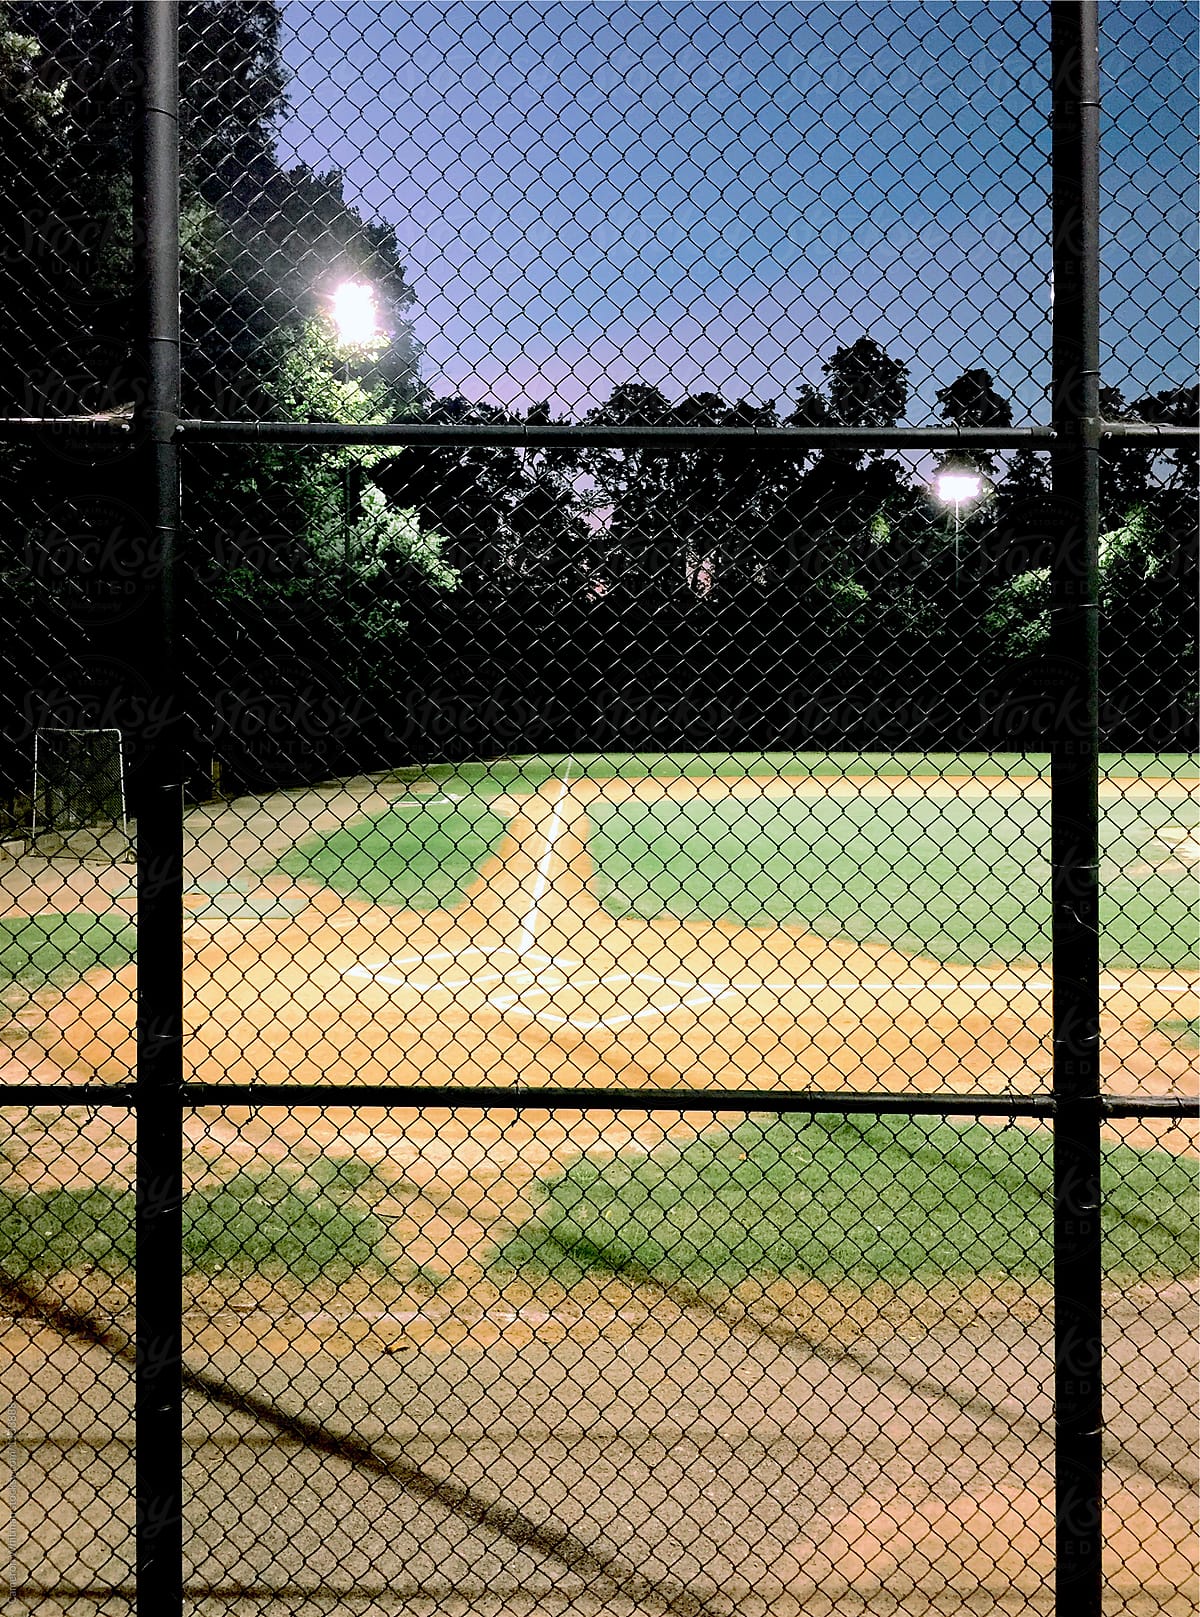 Empty baseball diamond at night